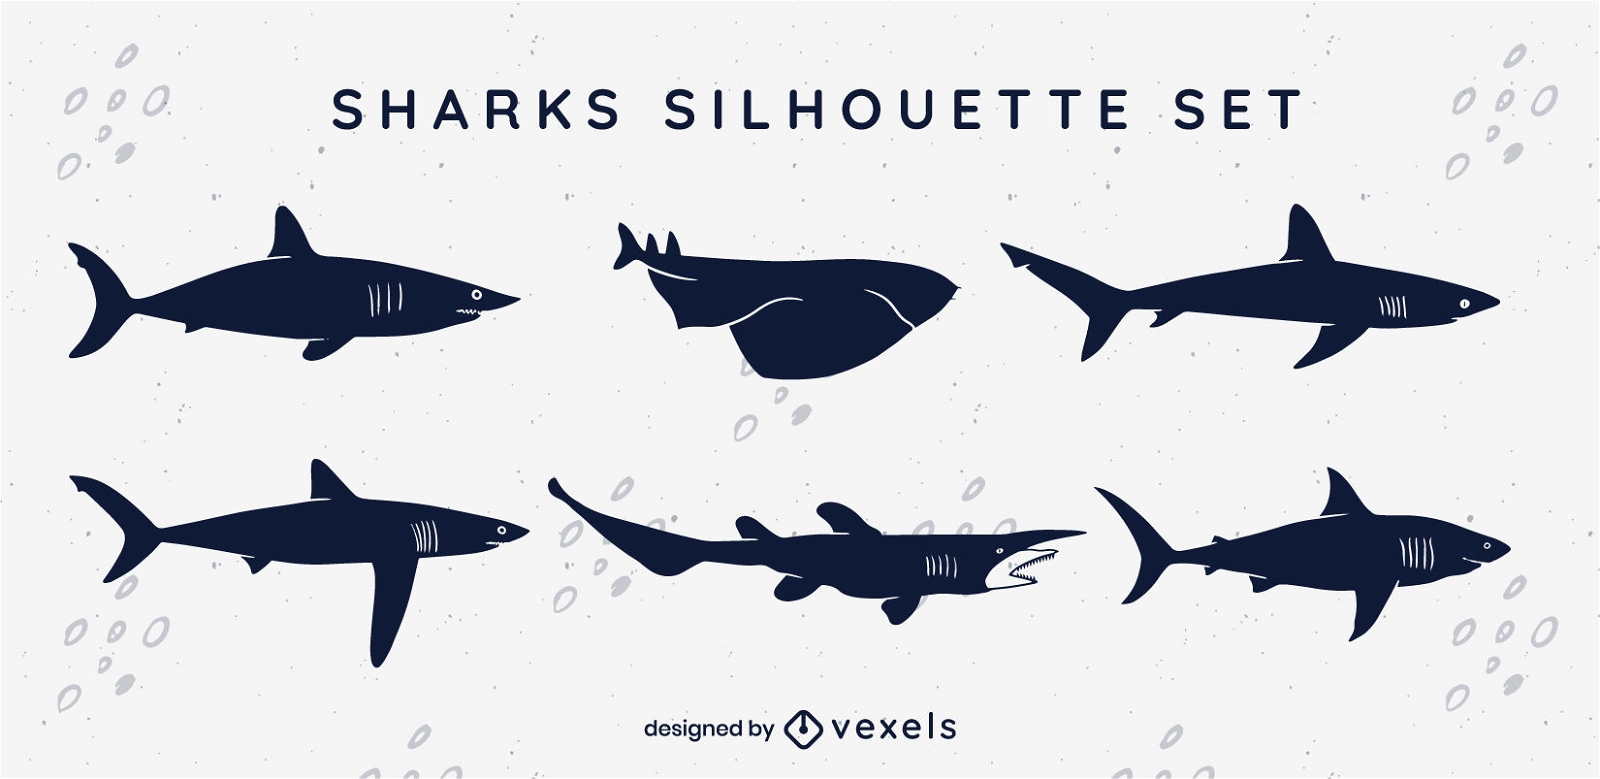 Sharks sea animals cut out set